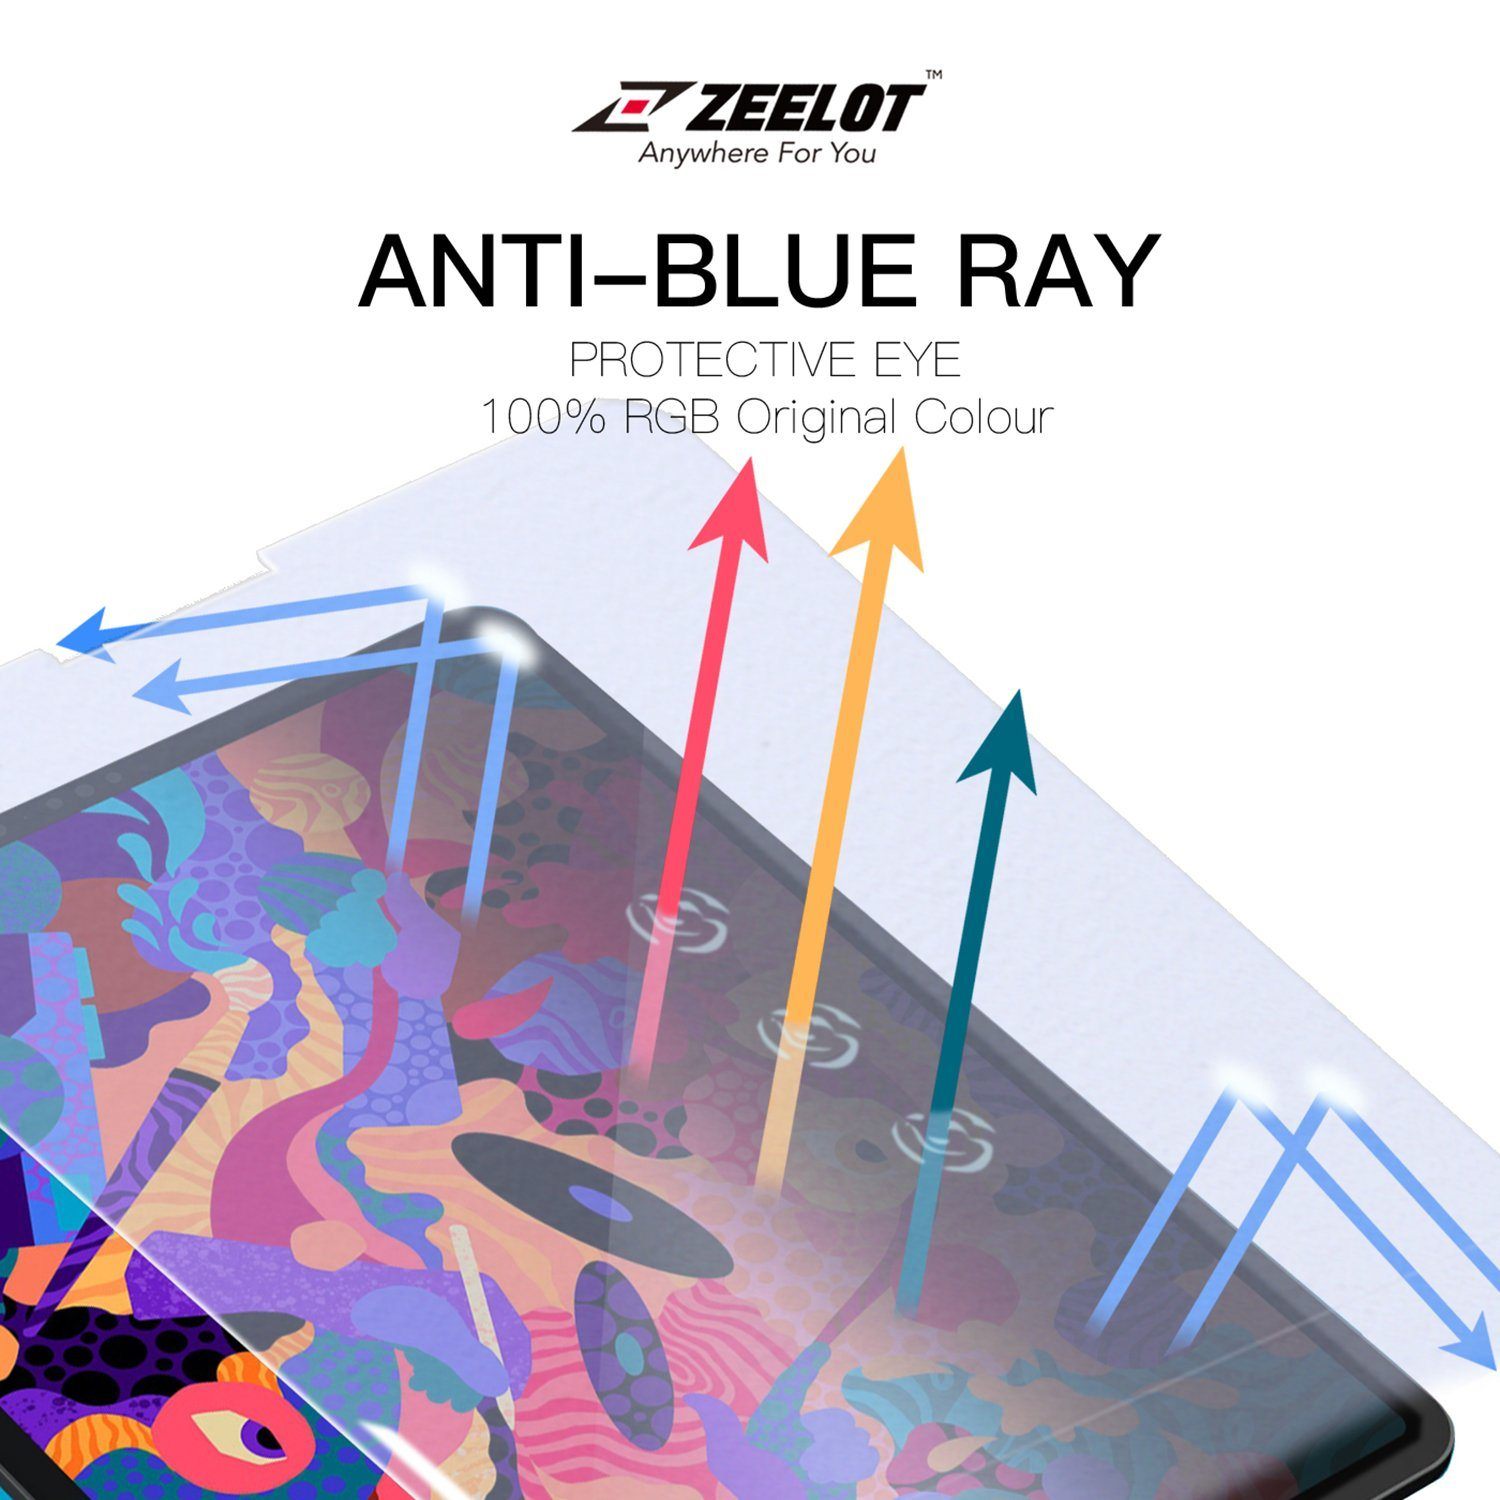 ZEELOT Paper Like Screen Protector for iPad 9.7"/Pro 9.7" (2018/2013), Anti Blue Ray Default ZEELOT 